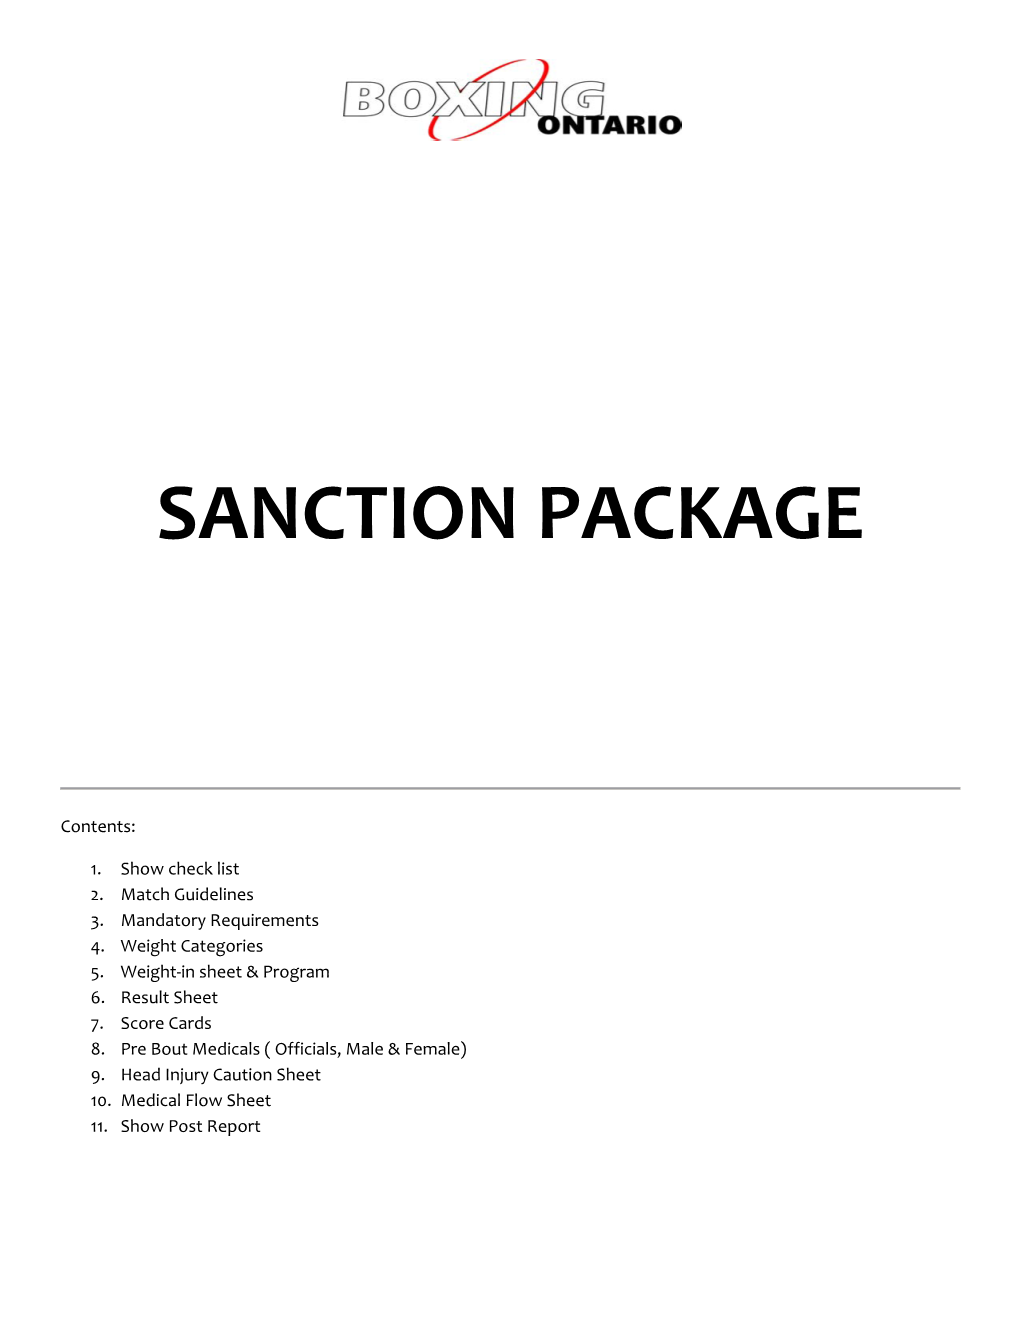 Sanction Package